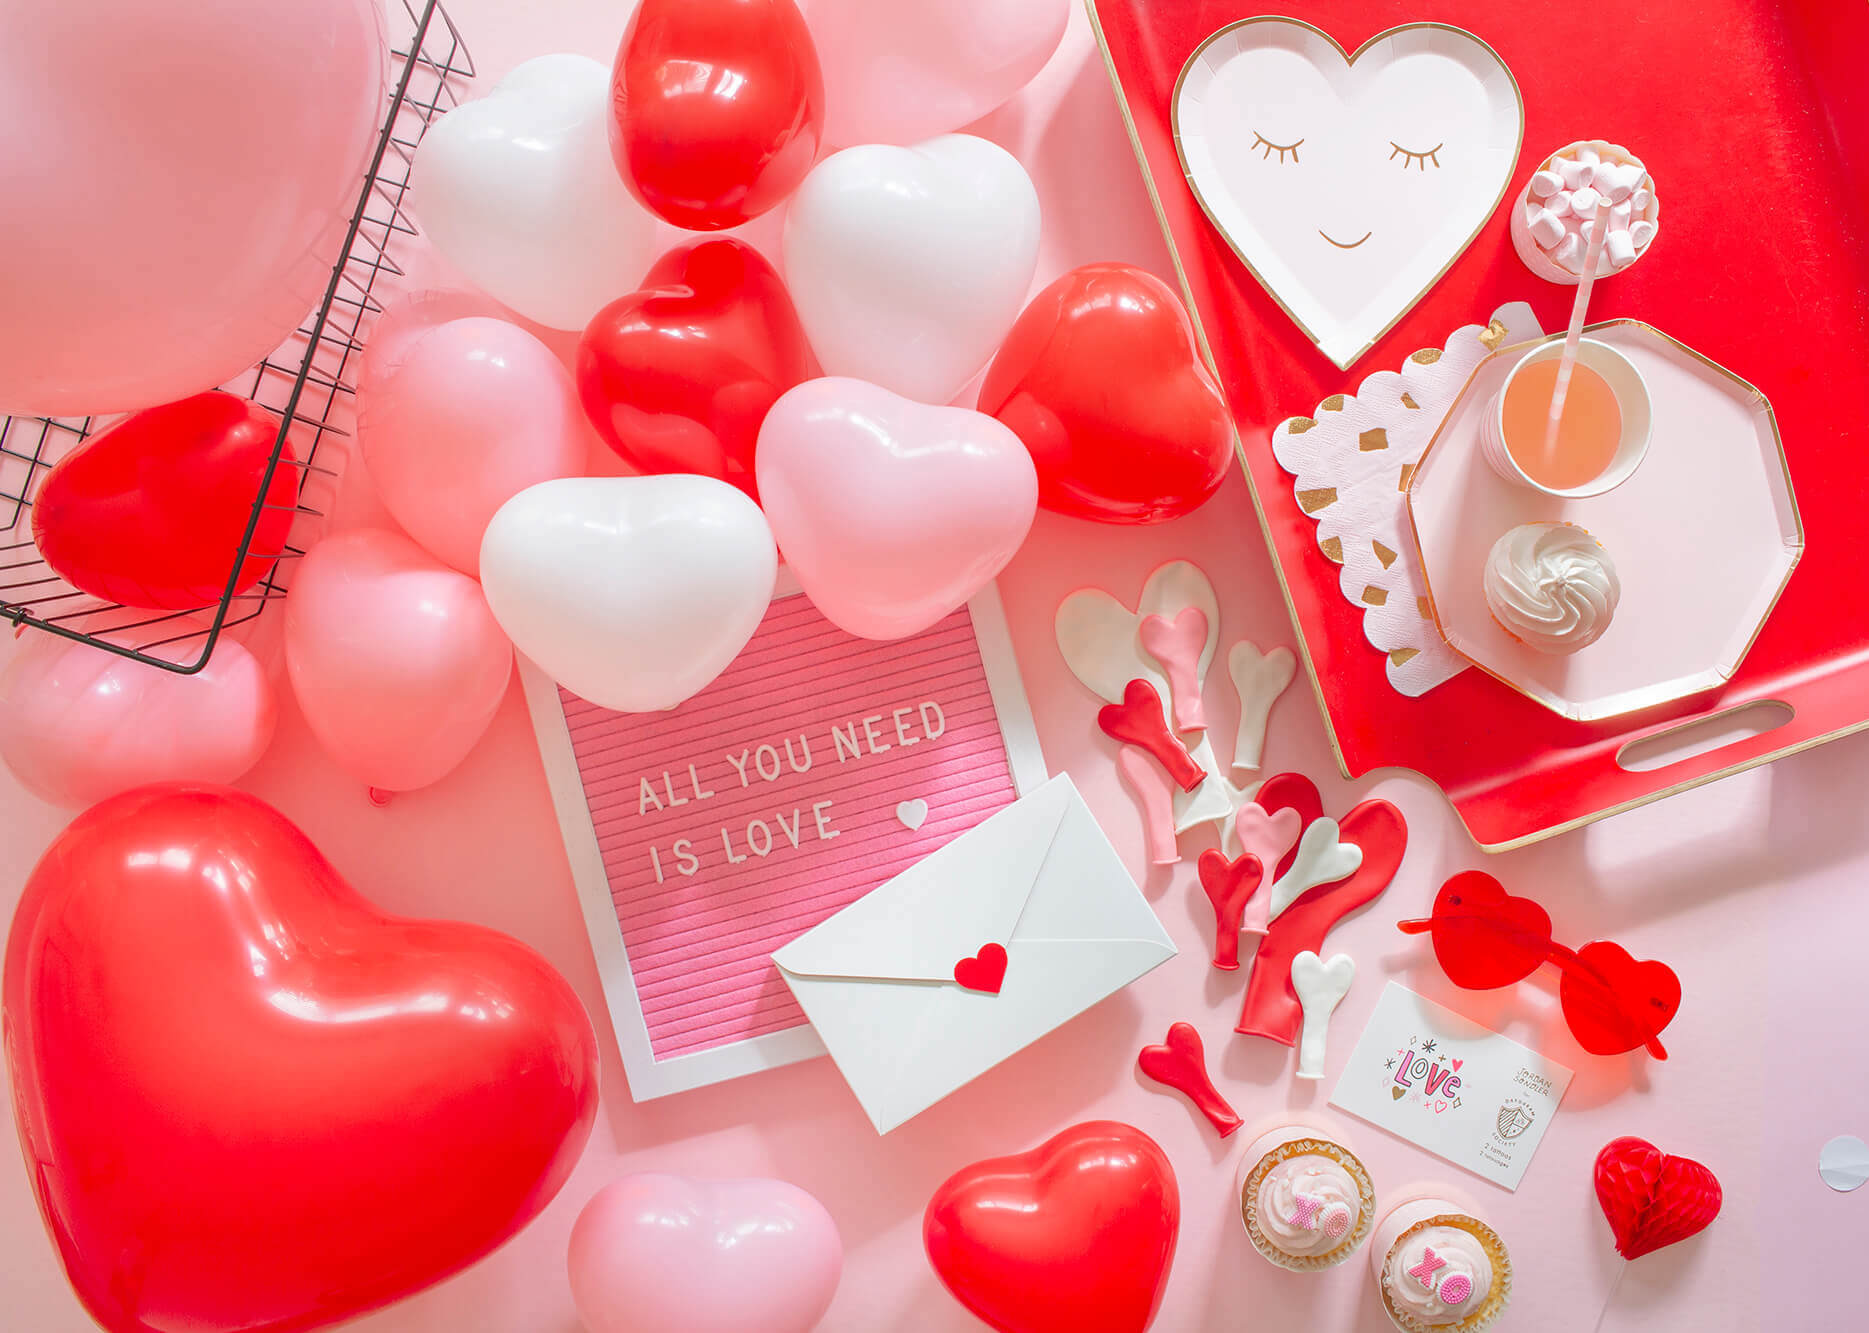 Baby Toddler Little Girls Valentines Day Cupcake Rose Dress